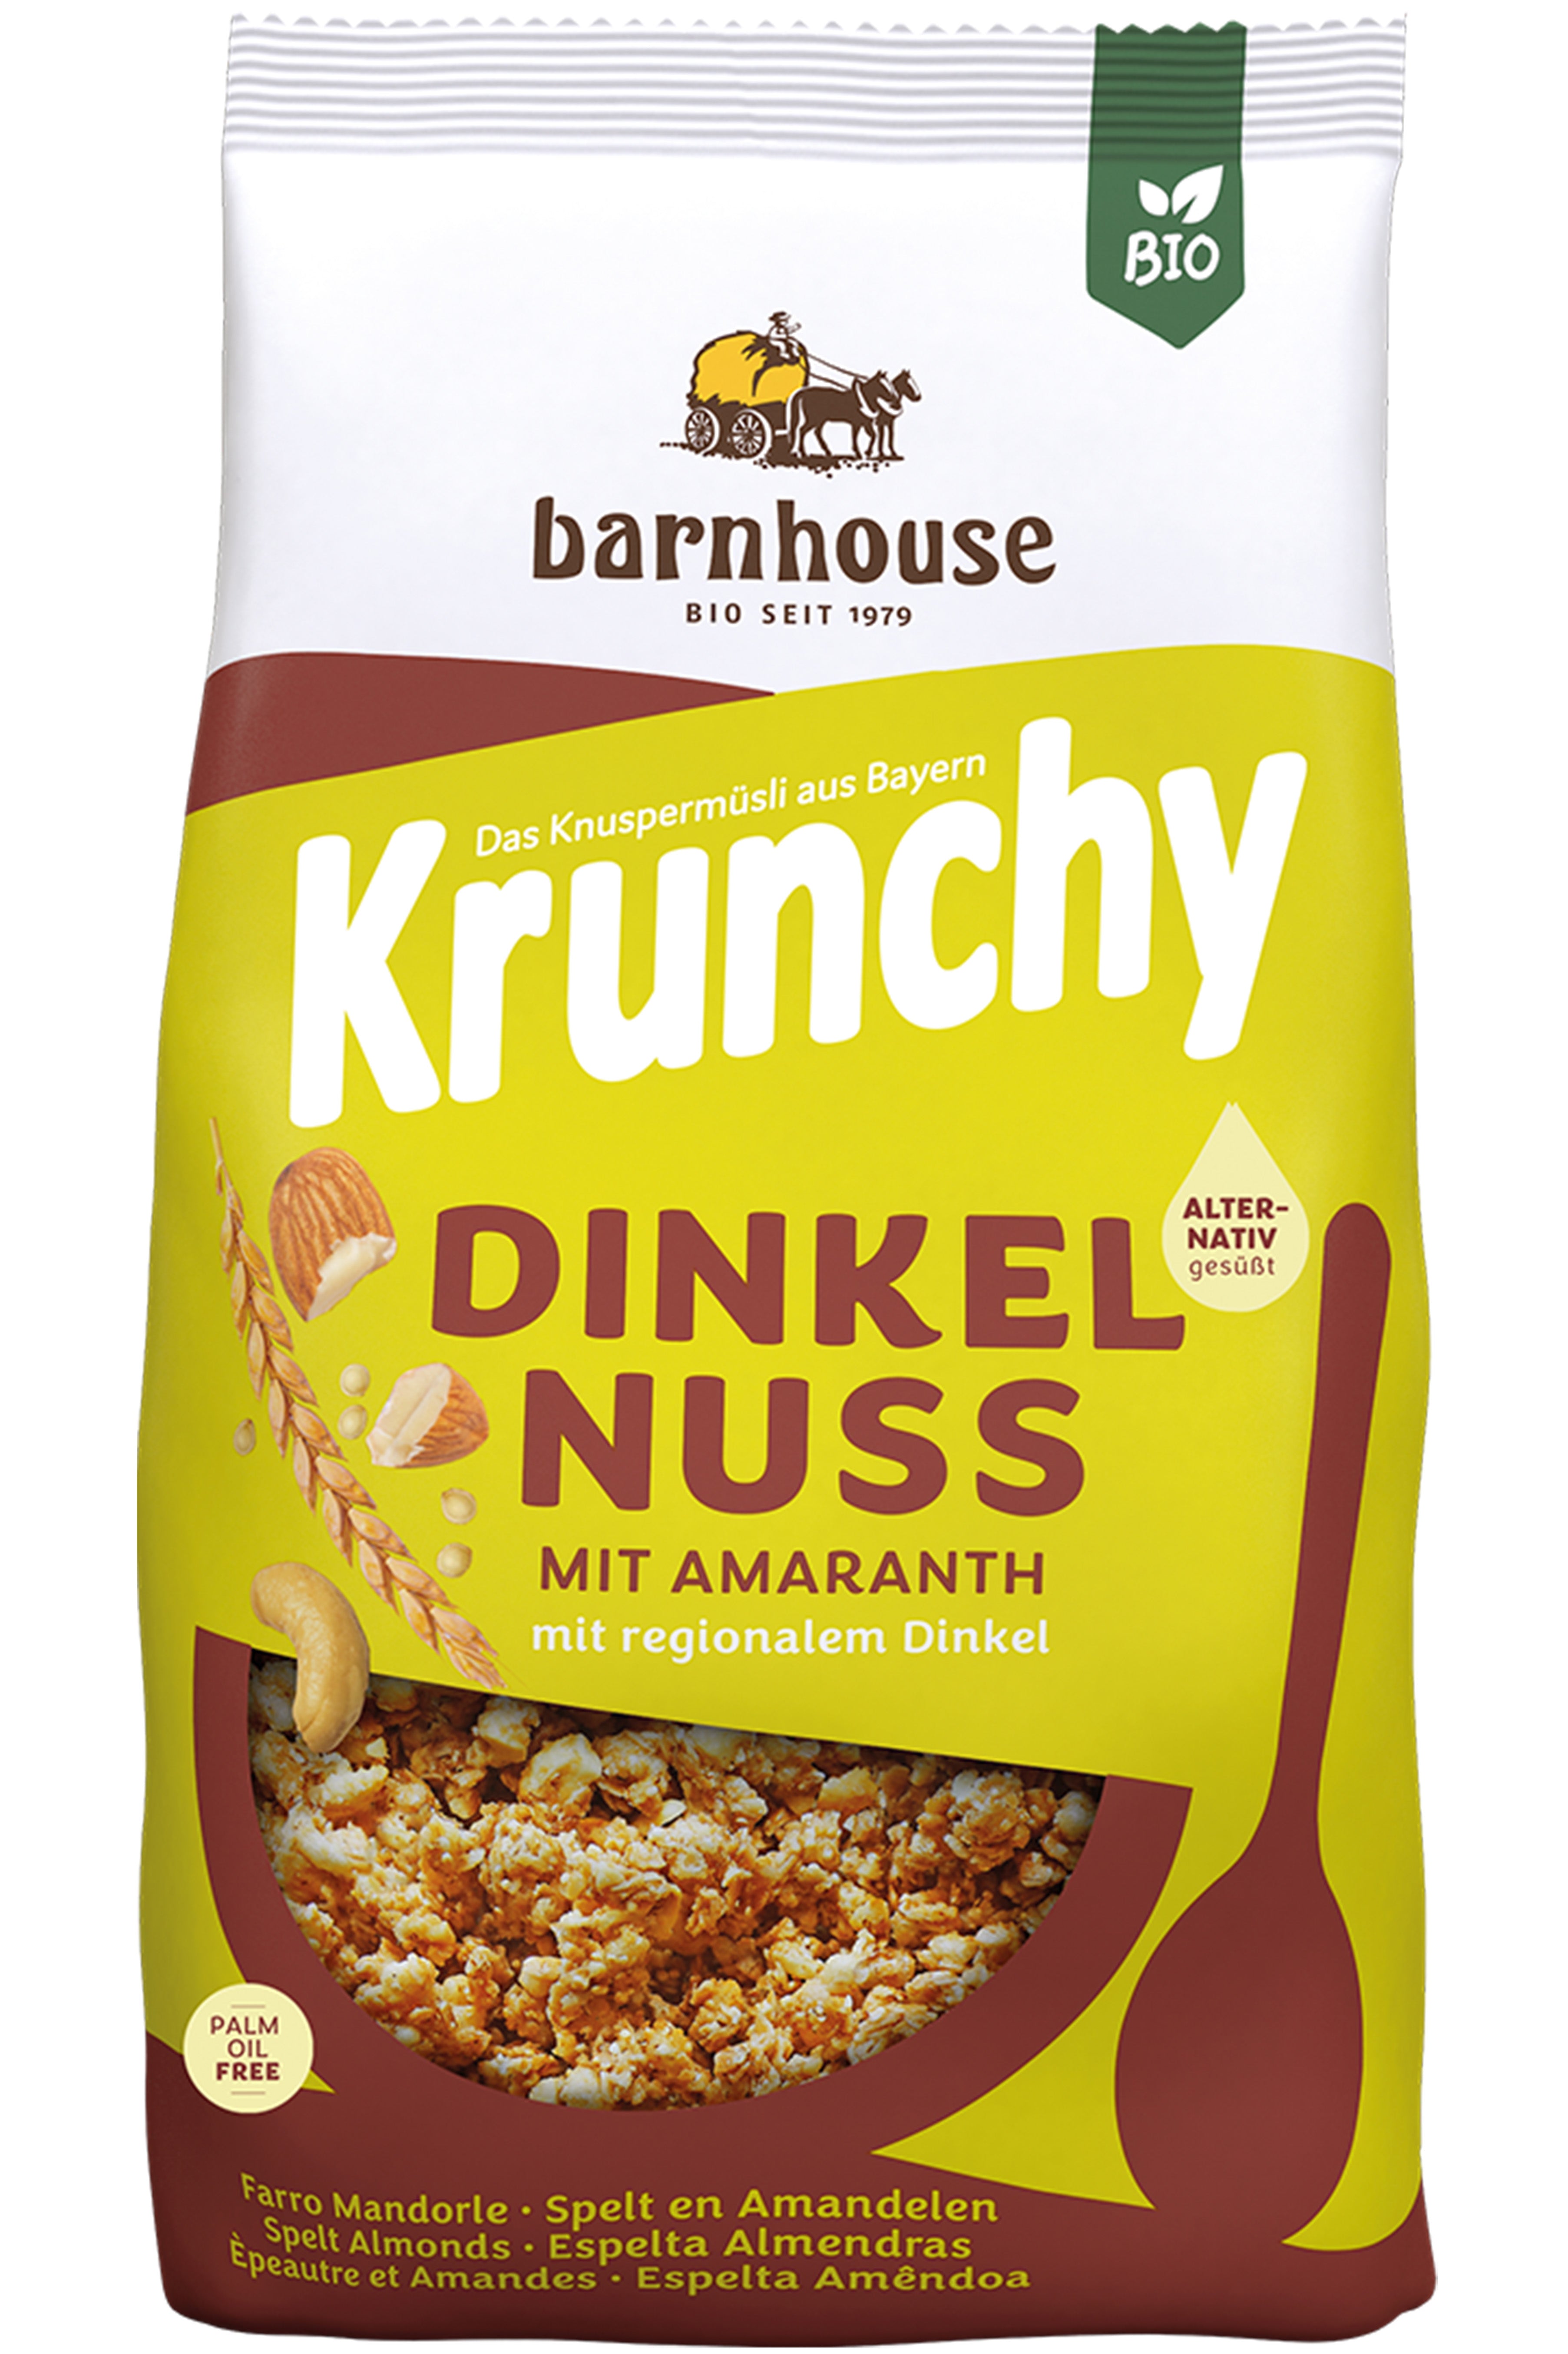 Krunchy Spelt Nut with Amaranth